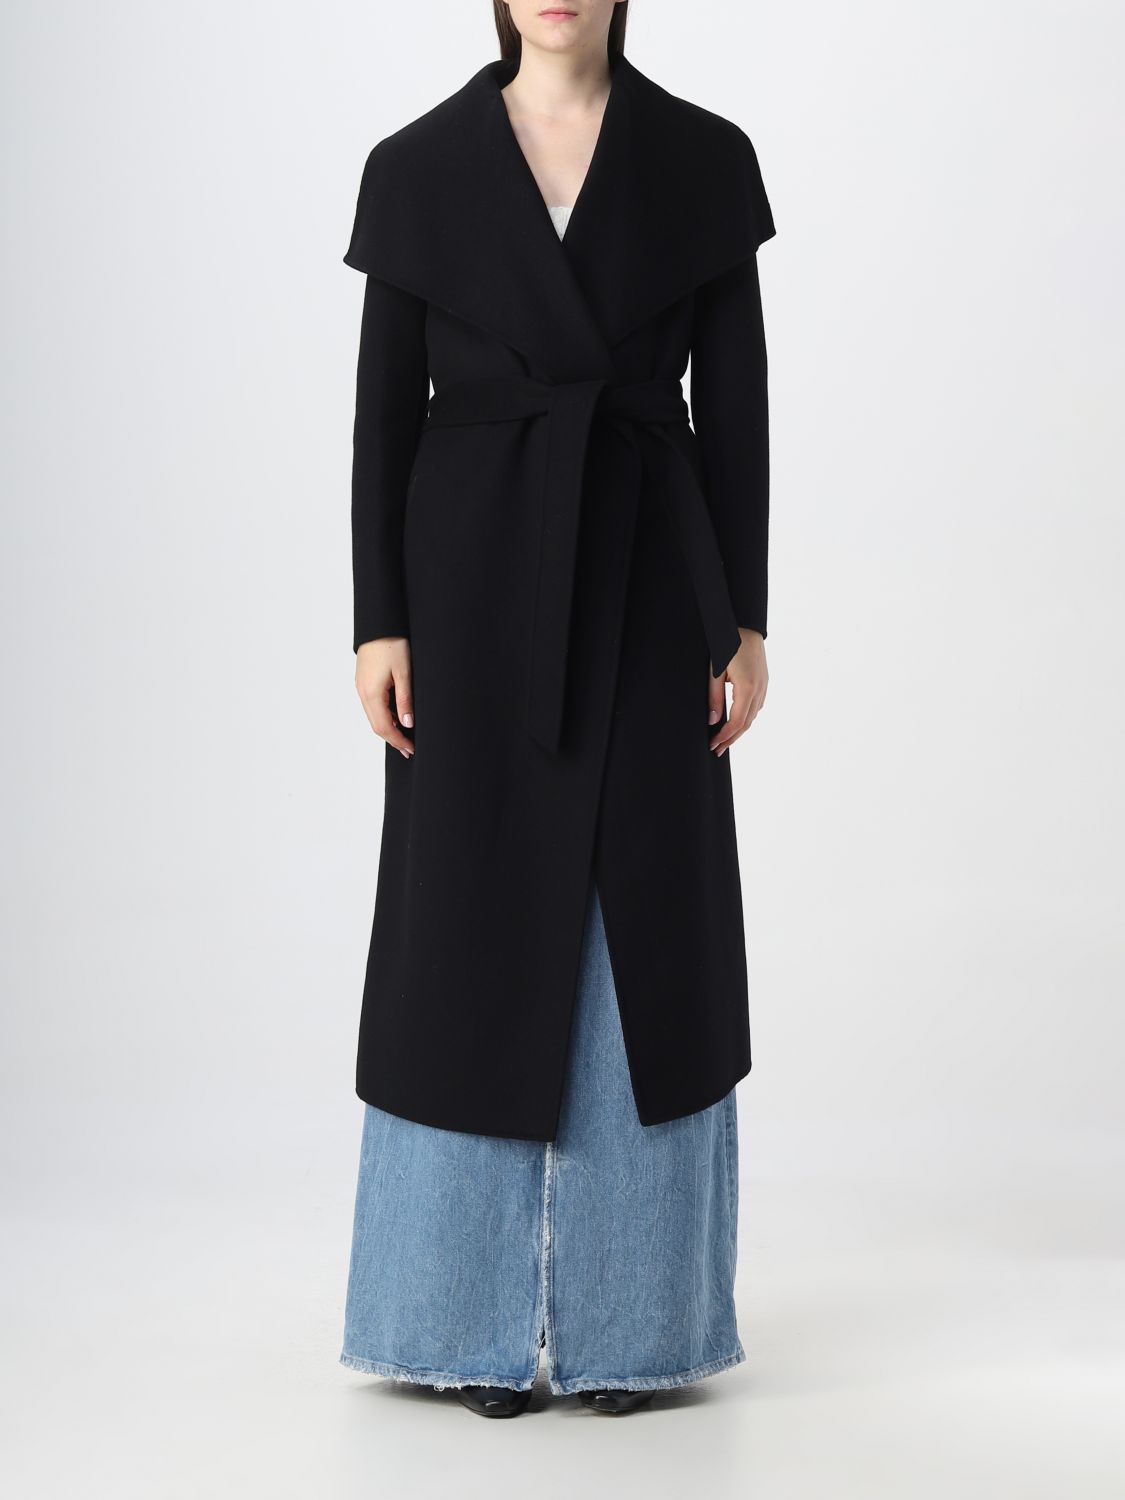 Mackage MAI-NV belted wool coat - Black